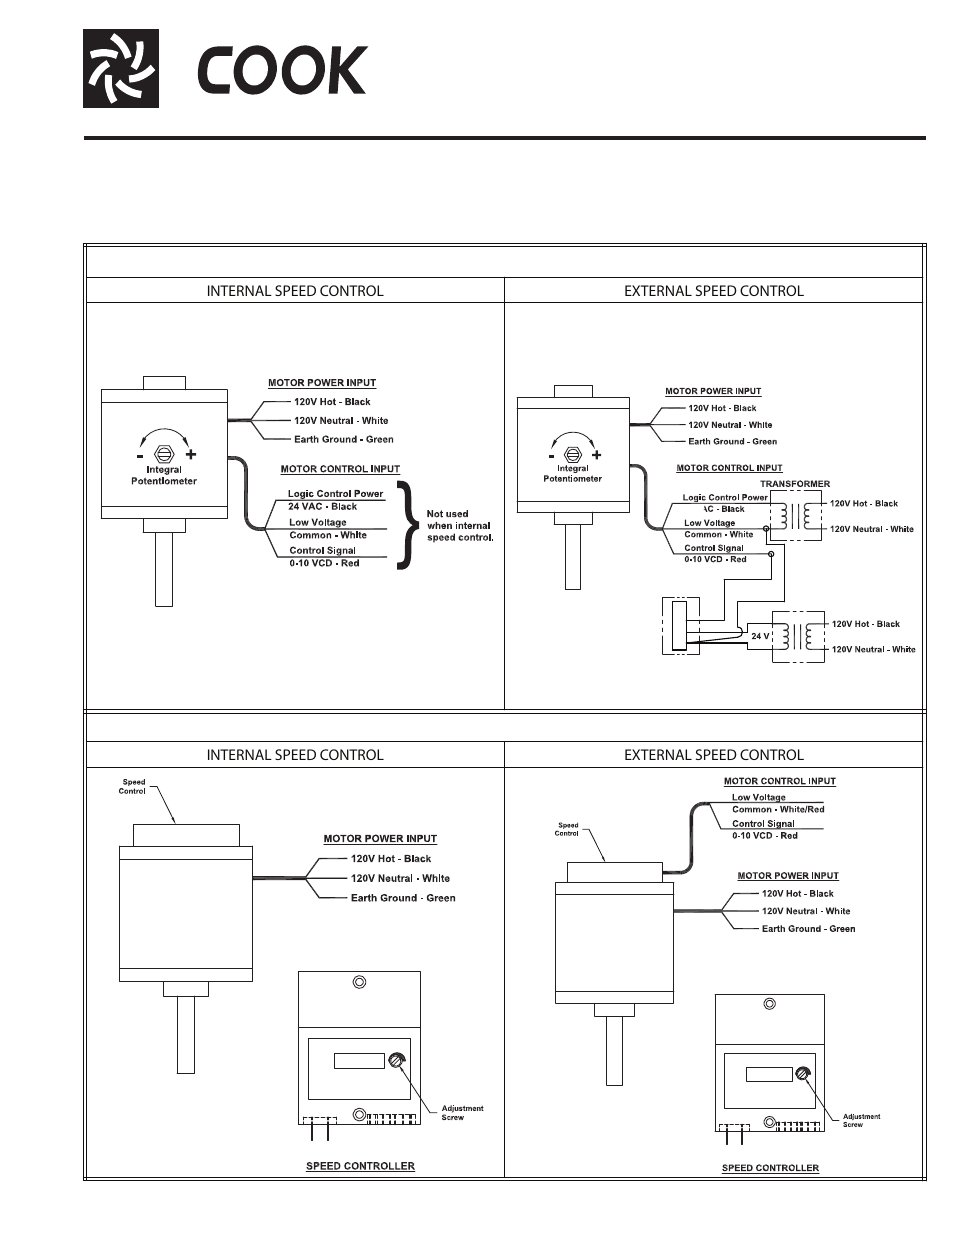 Cook Ec Motor Wiring User Manual